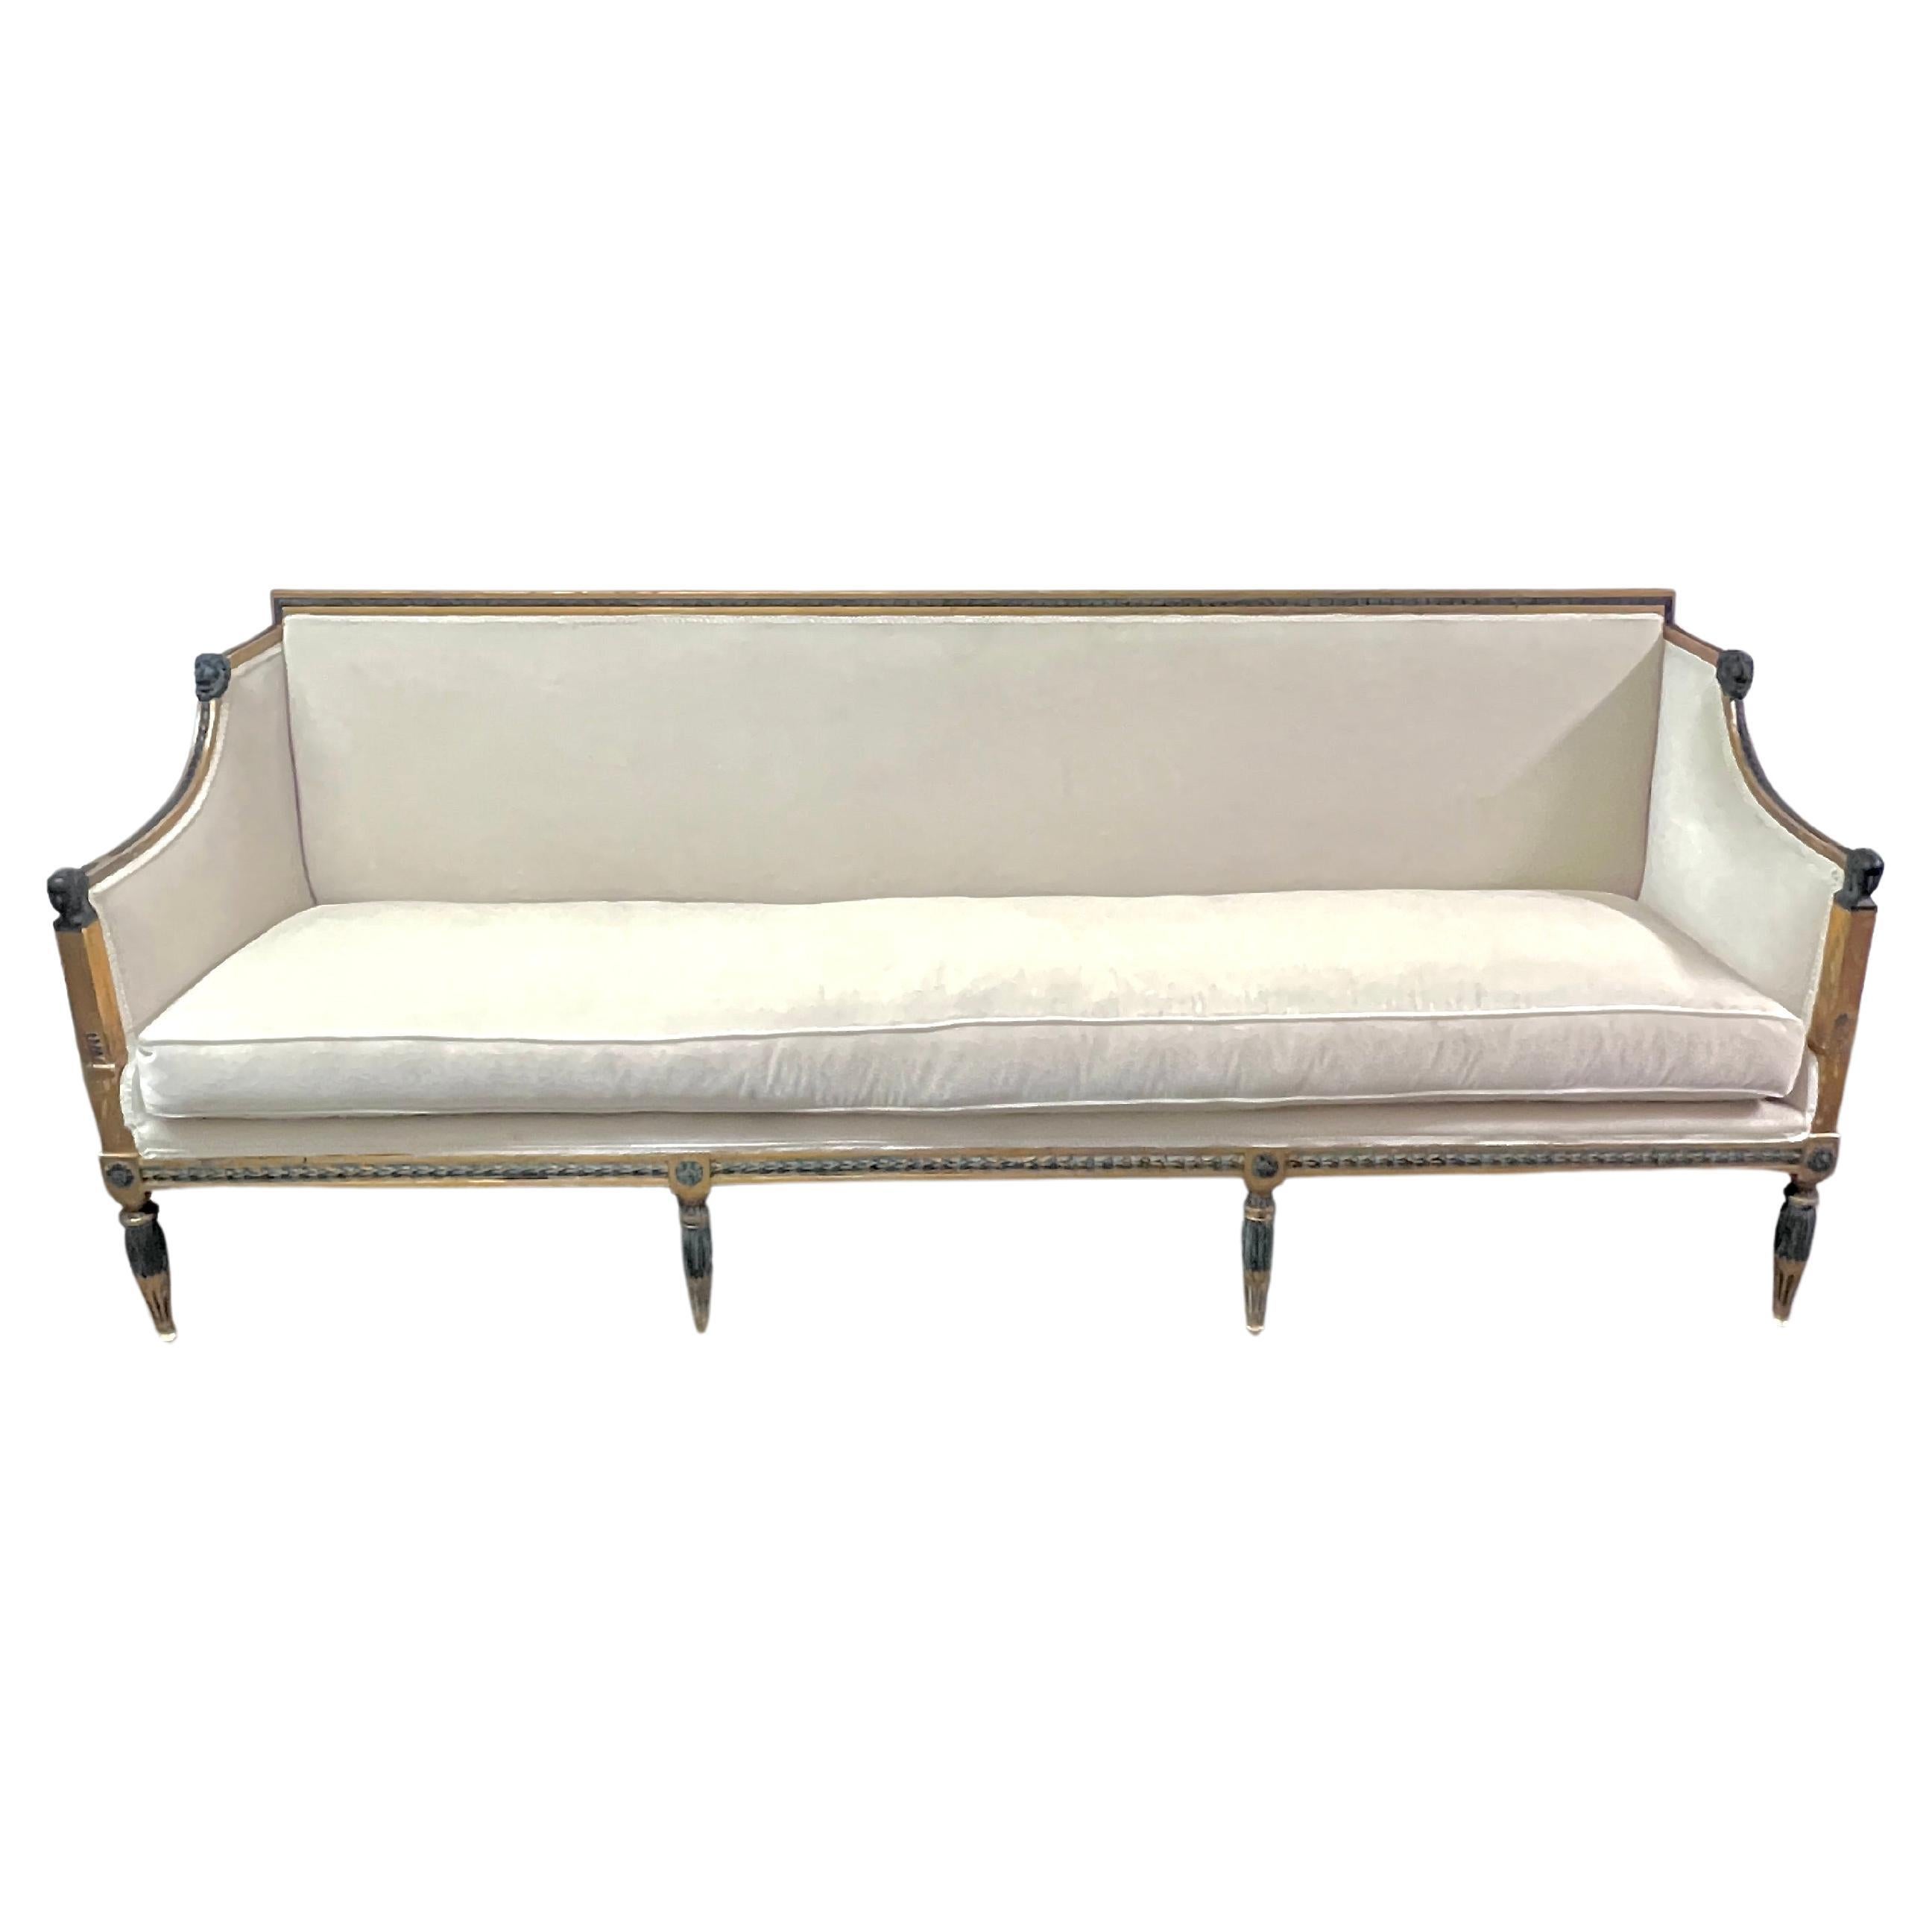 Early 19th century Swedish Gustavian Sofa  For Sale